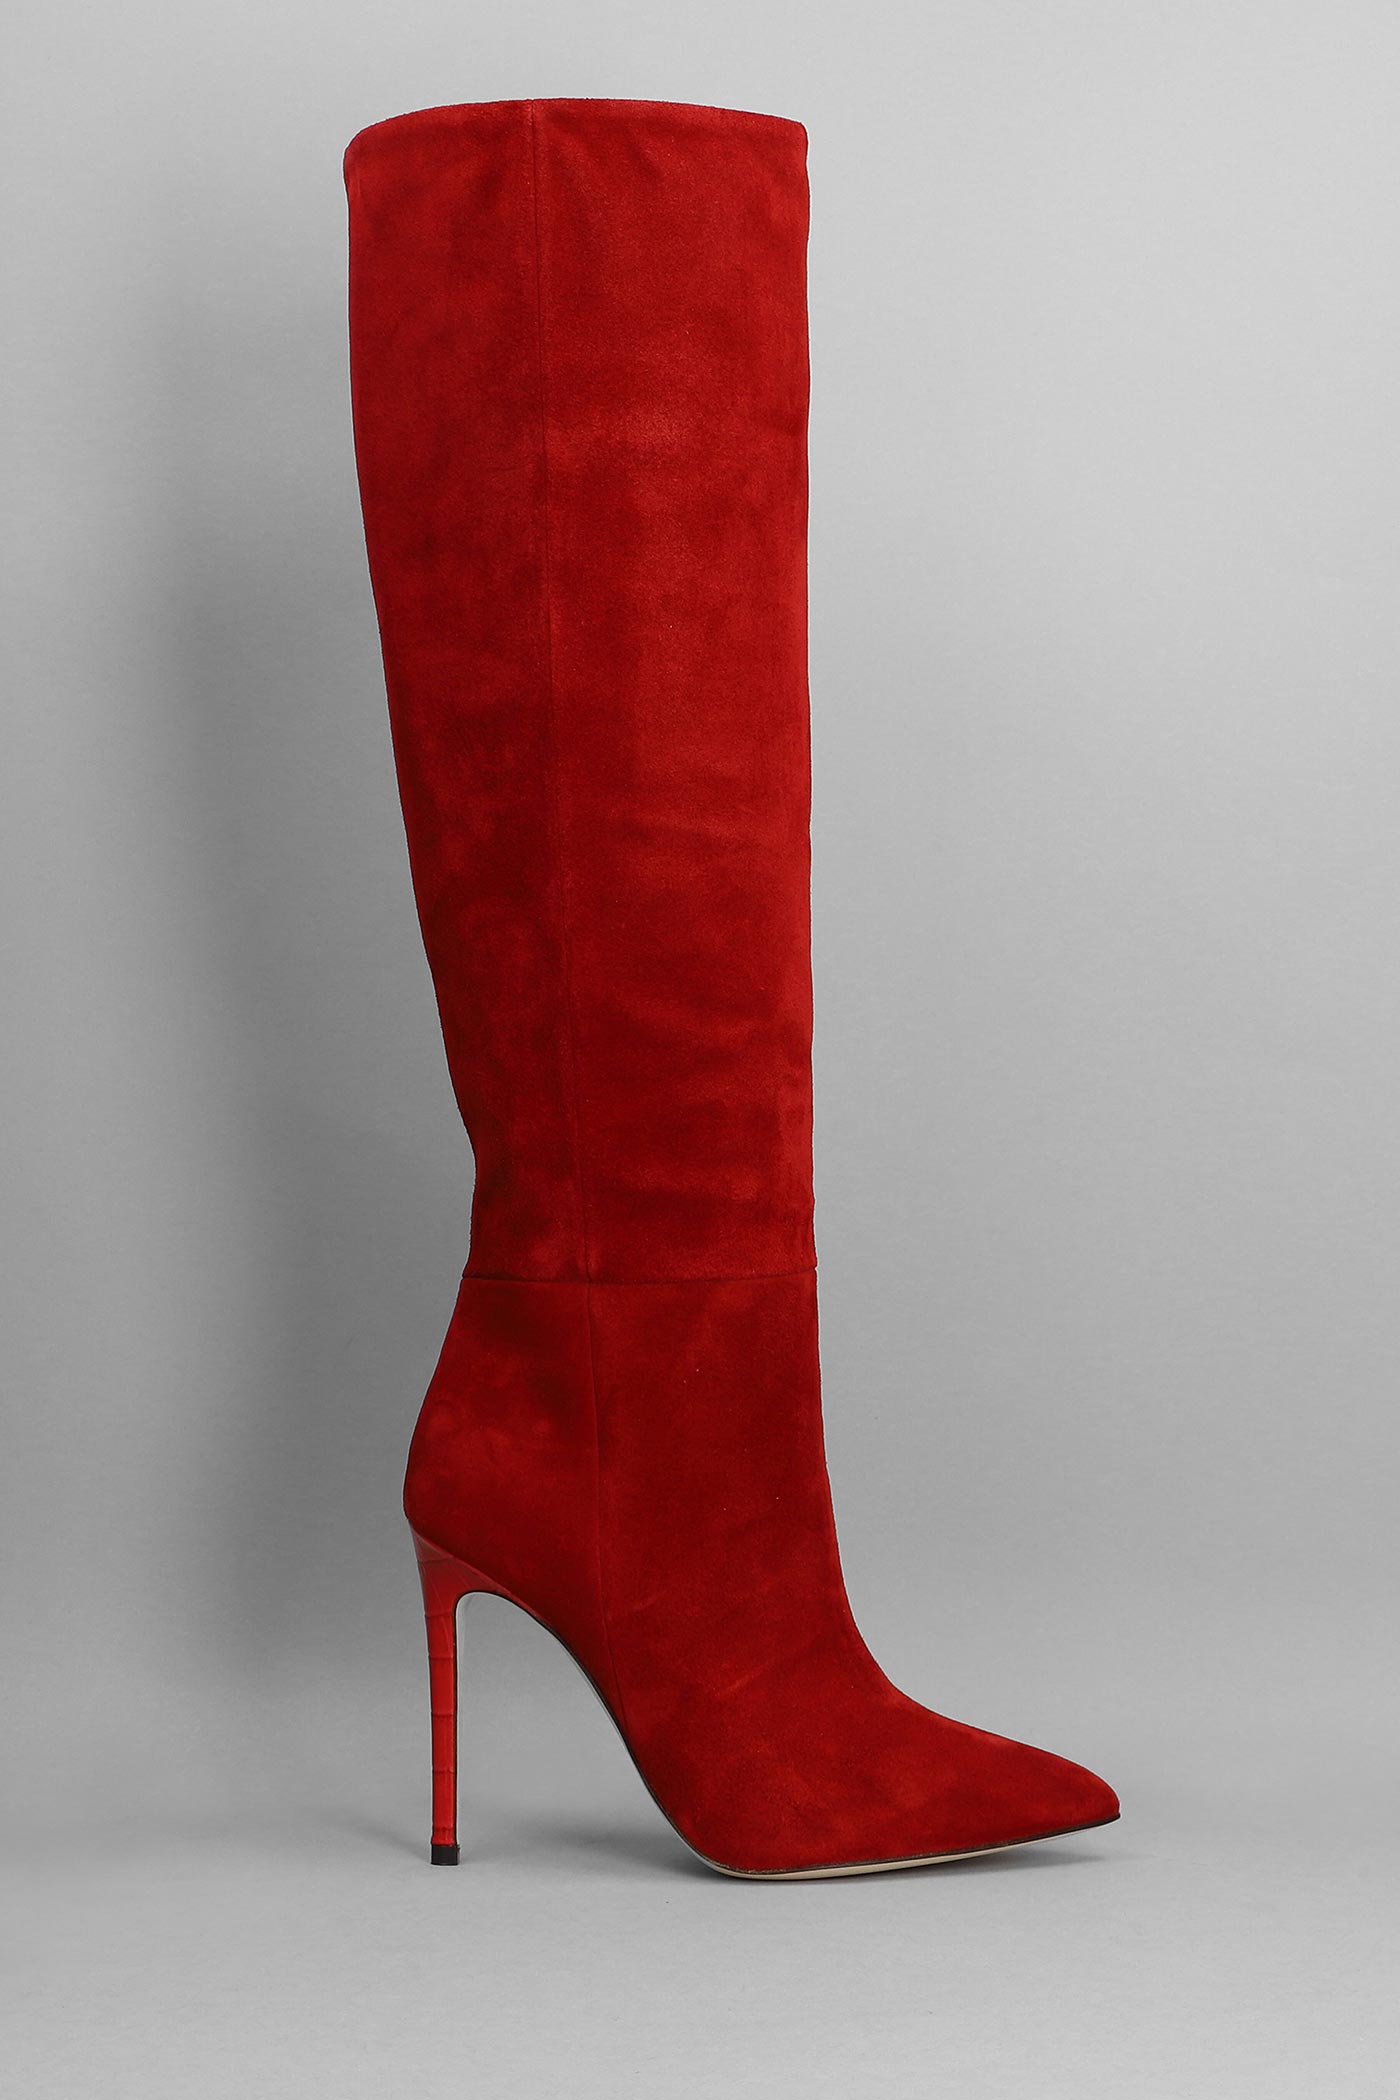 Paris Texas High Heels Boots In Red Suede